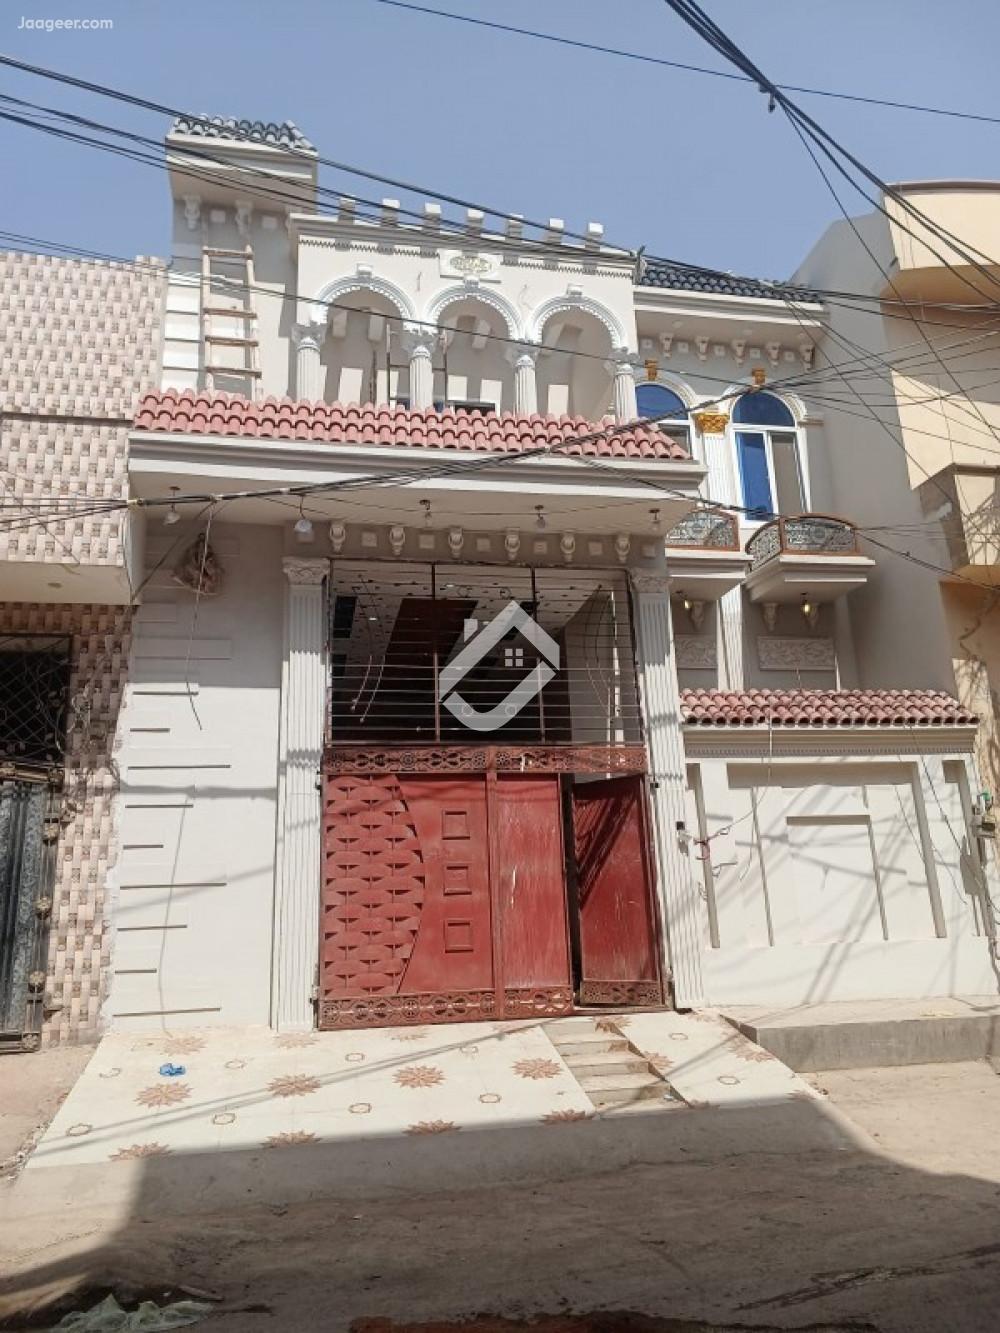 Main image 5 Marla Double Storey House For Sale In Waqar Town Waqar Town Faislabaad Road Sargodha 